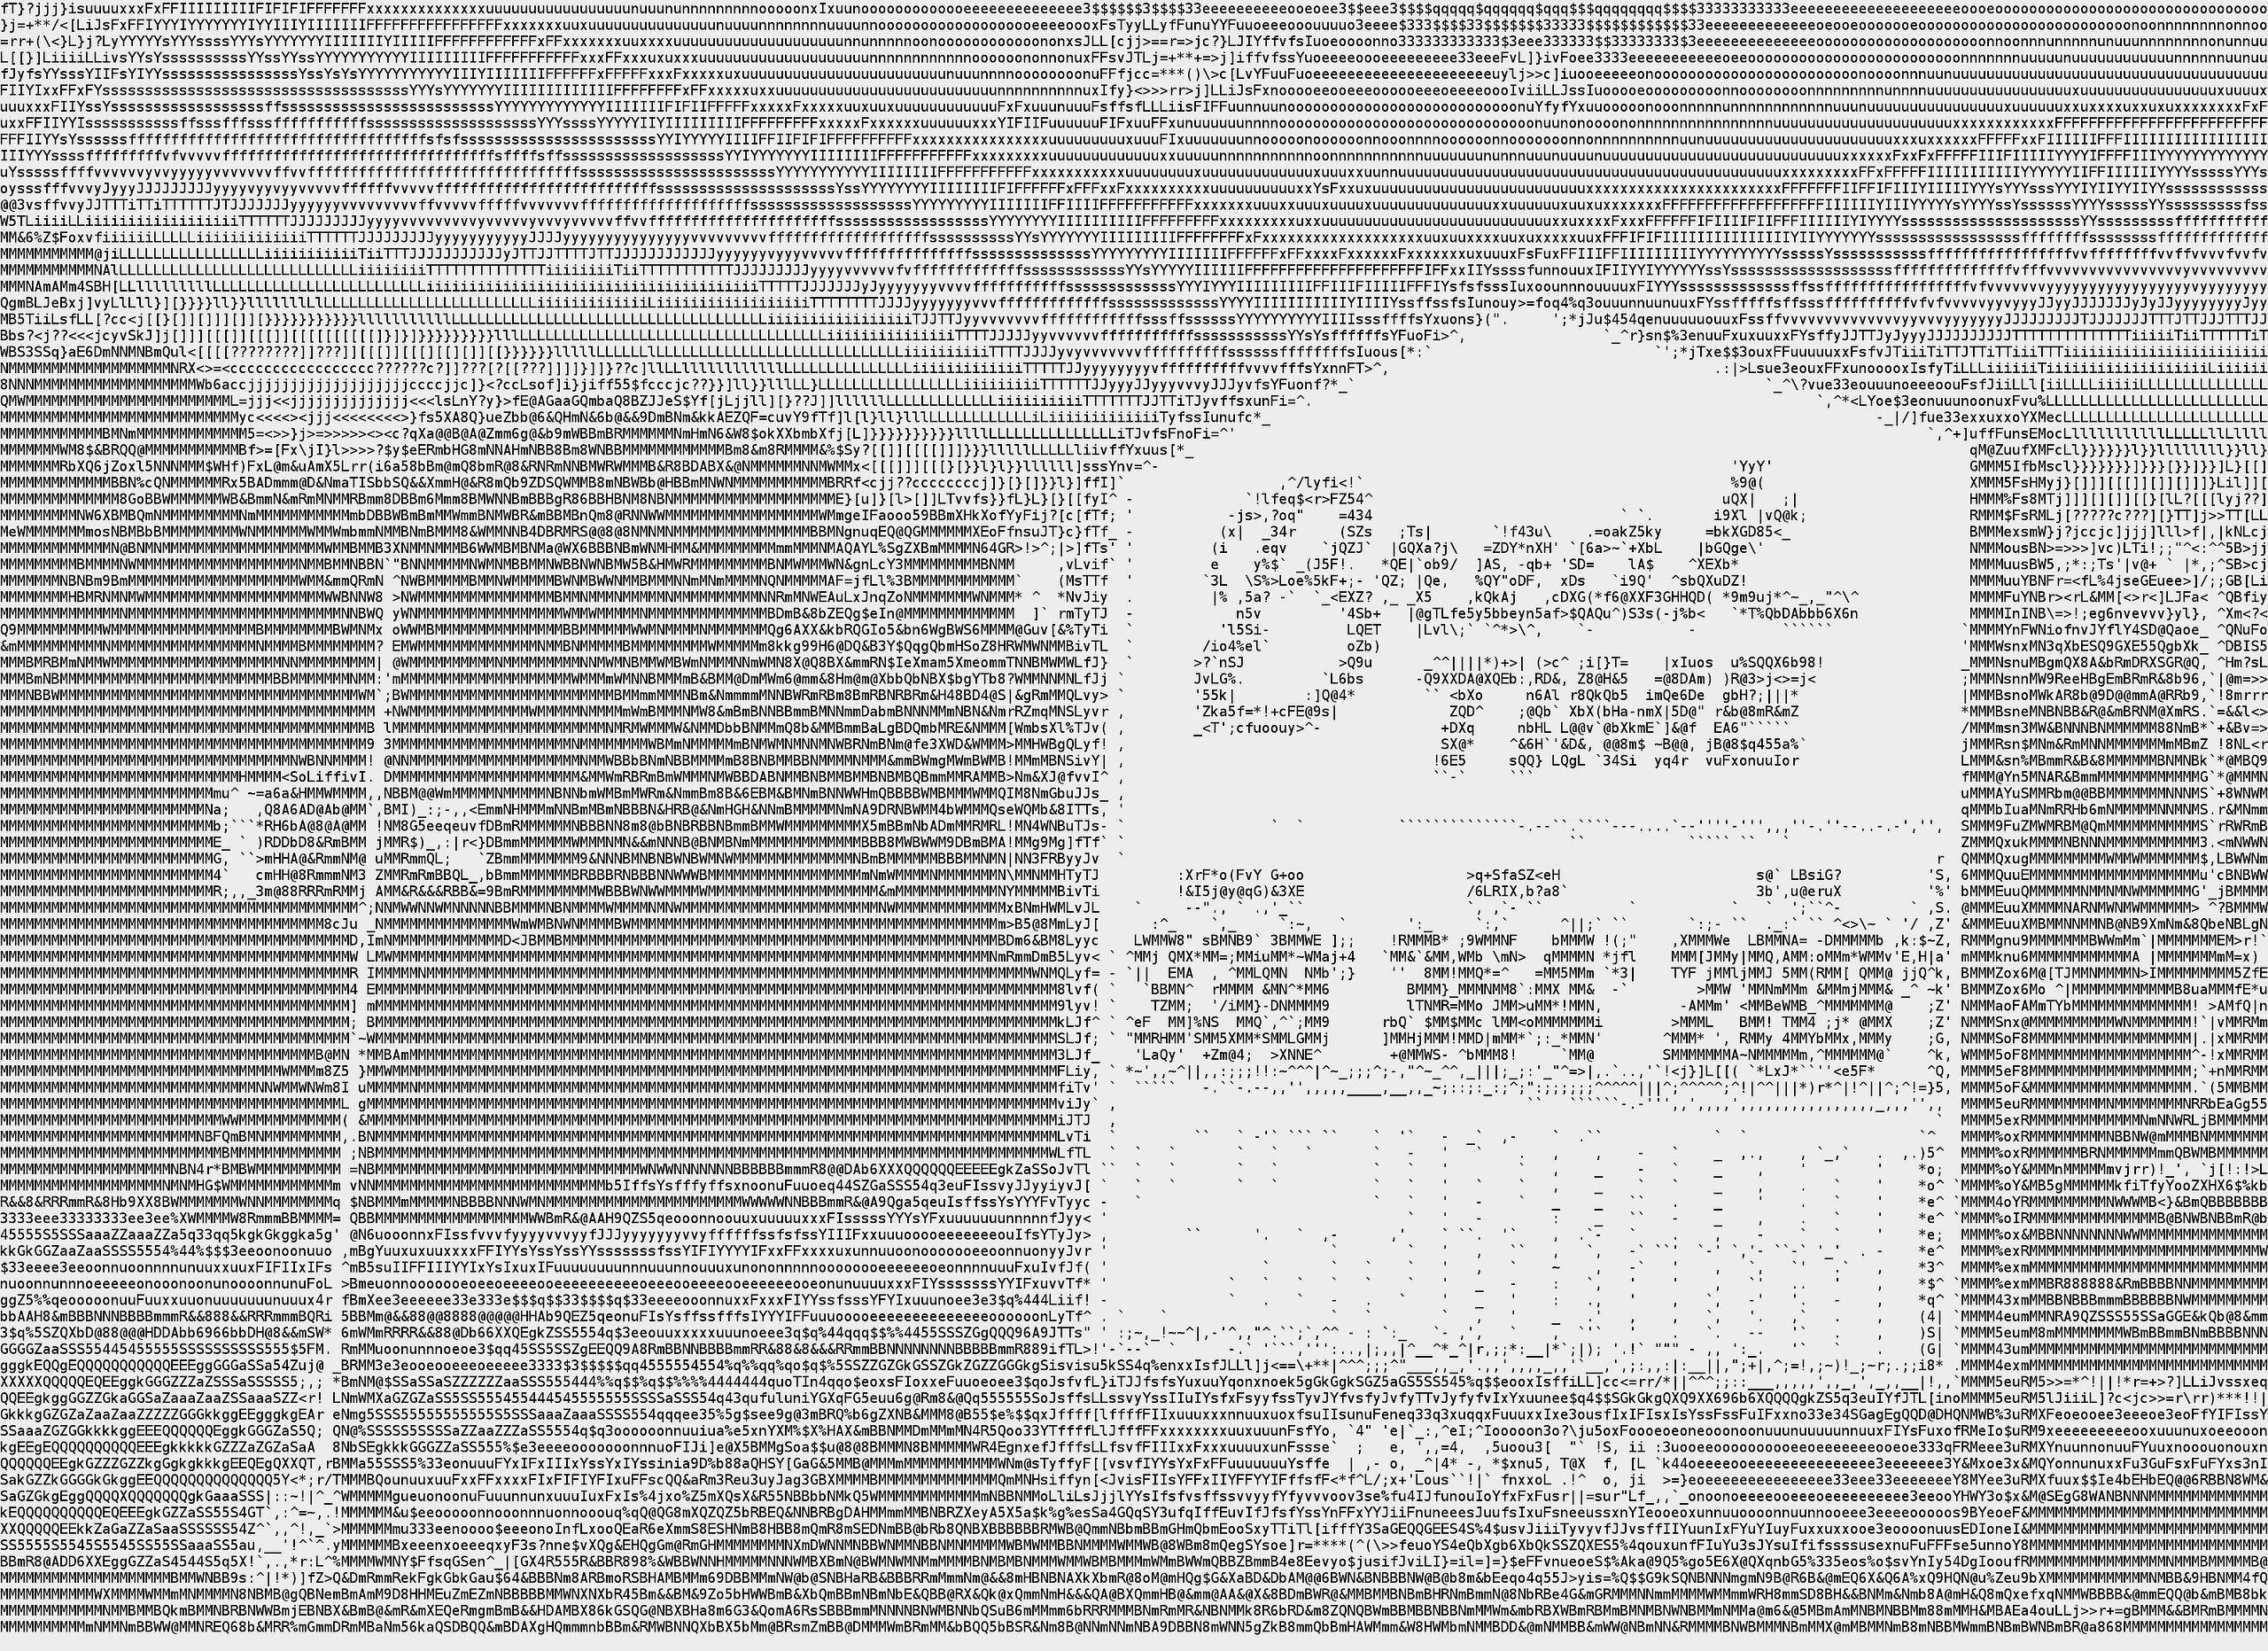 A manual (non-digital) Break Time primary fuel price sign.